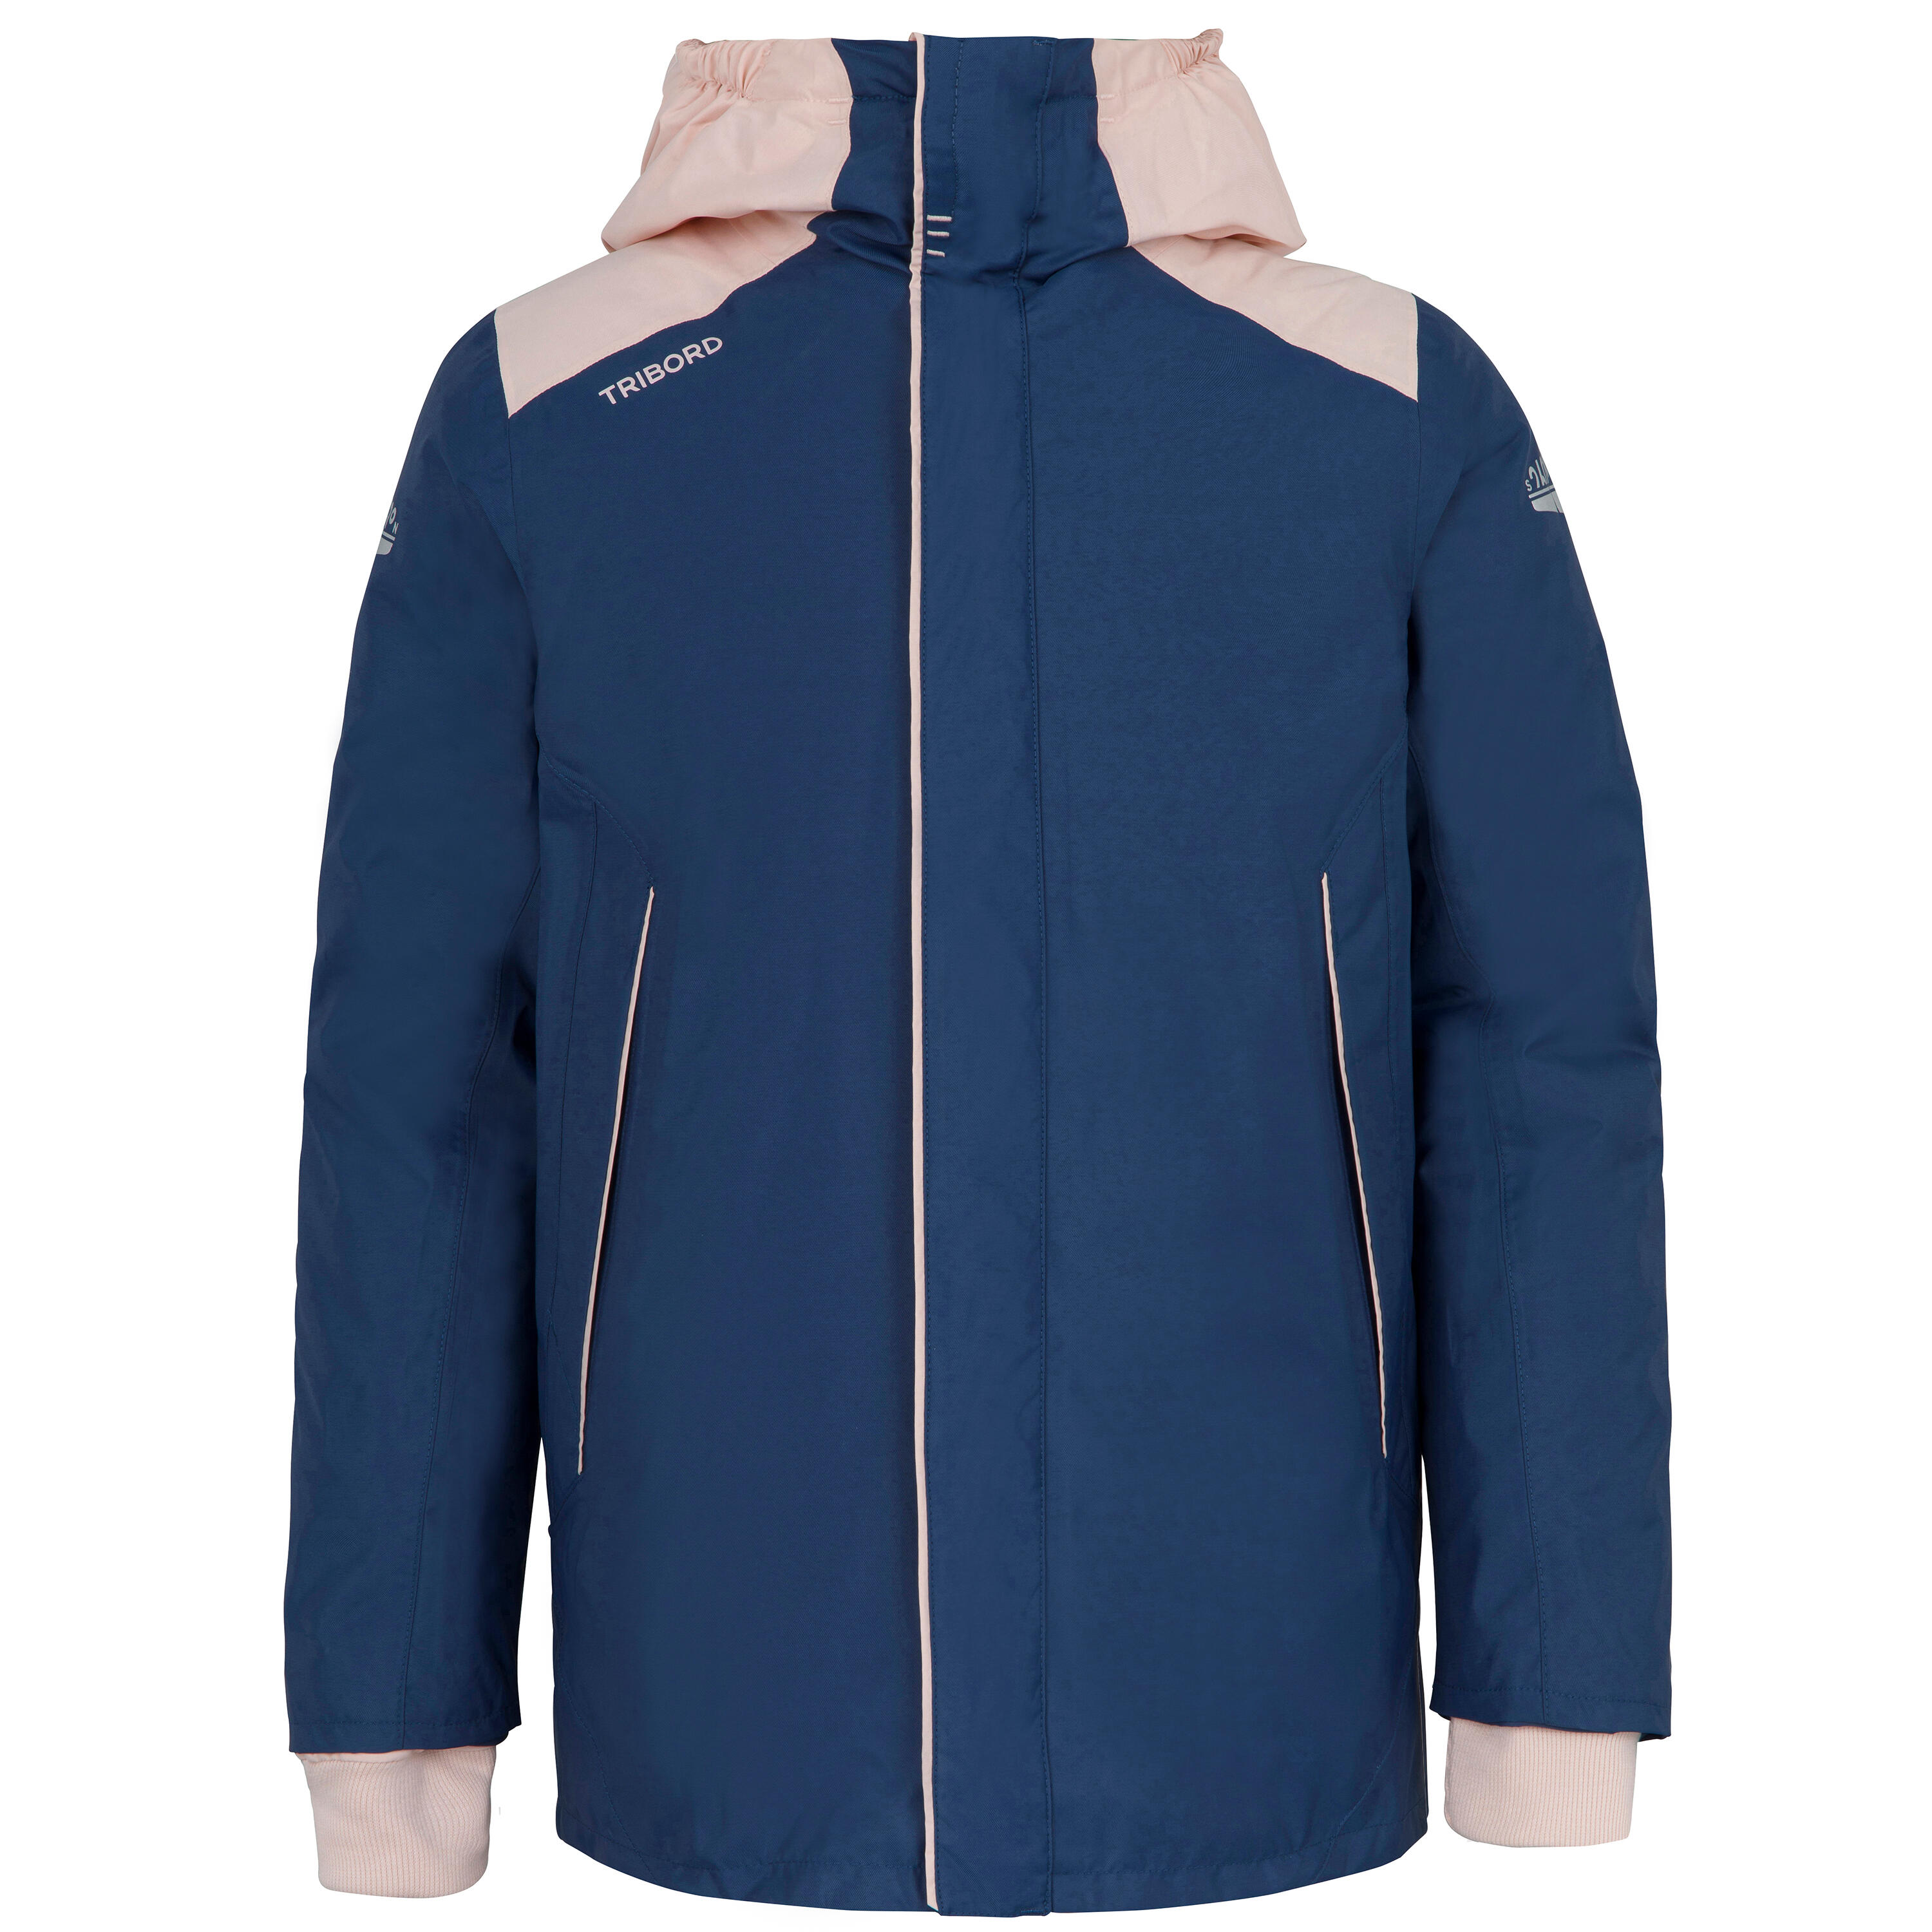 Kids sailing jacket warm and waterproof Sailing 100 blue pink 2/12